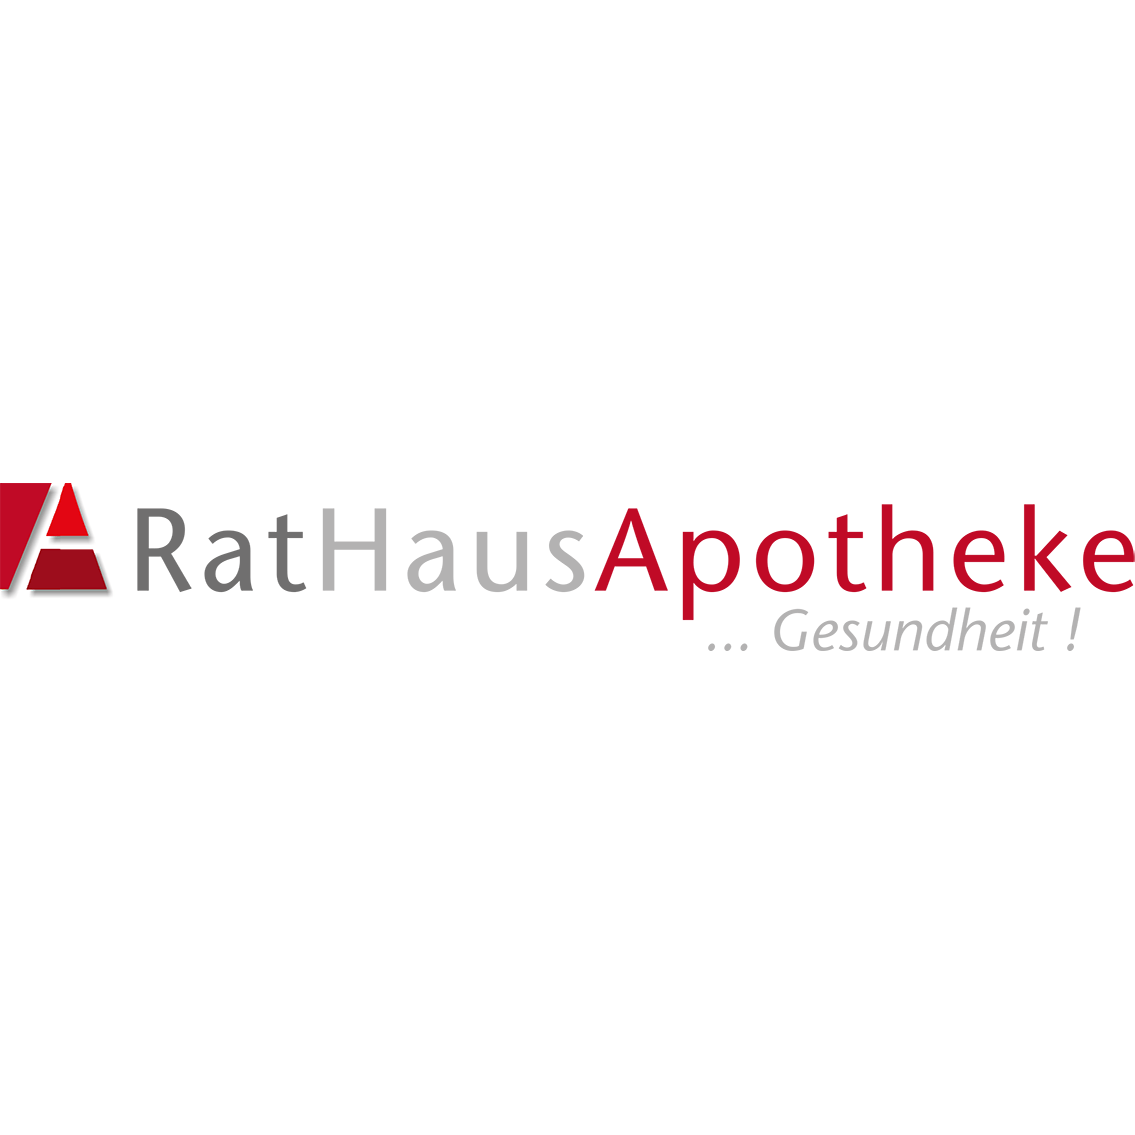 Rathaus-Apotheke  